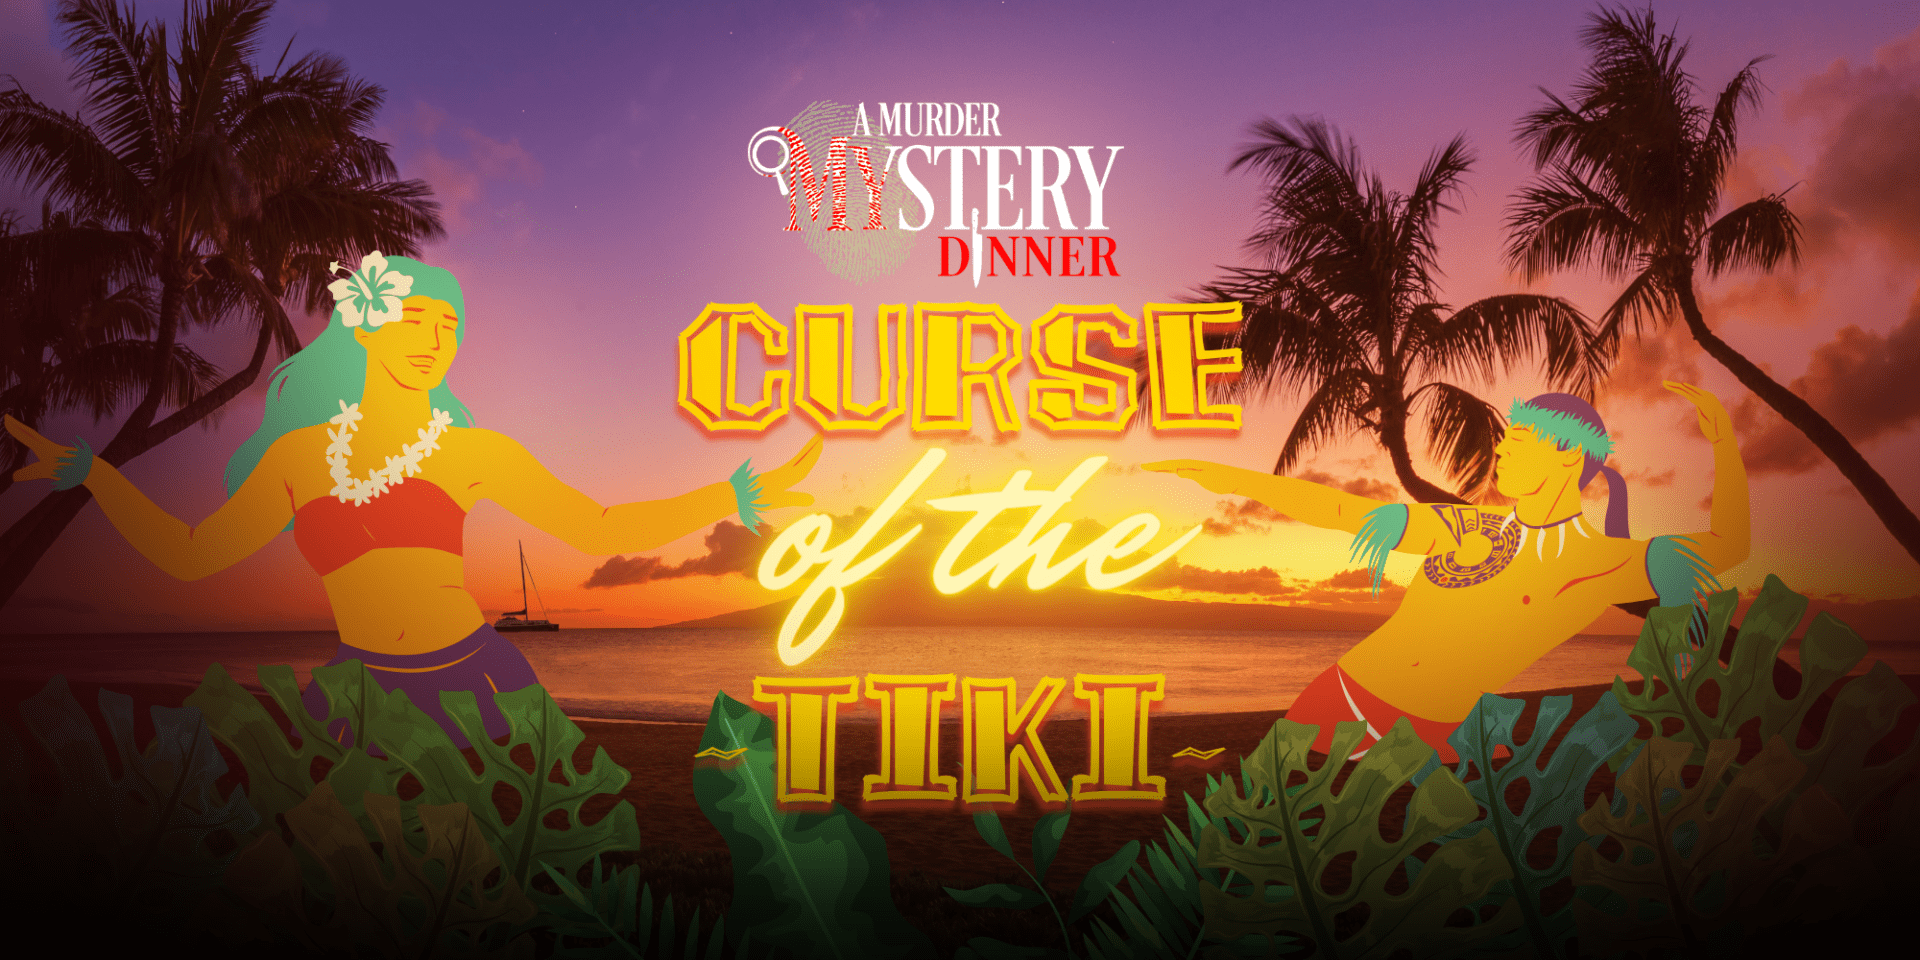 Curse of The Tiki Murder Mystery - A Murder Mystery Dinner